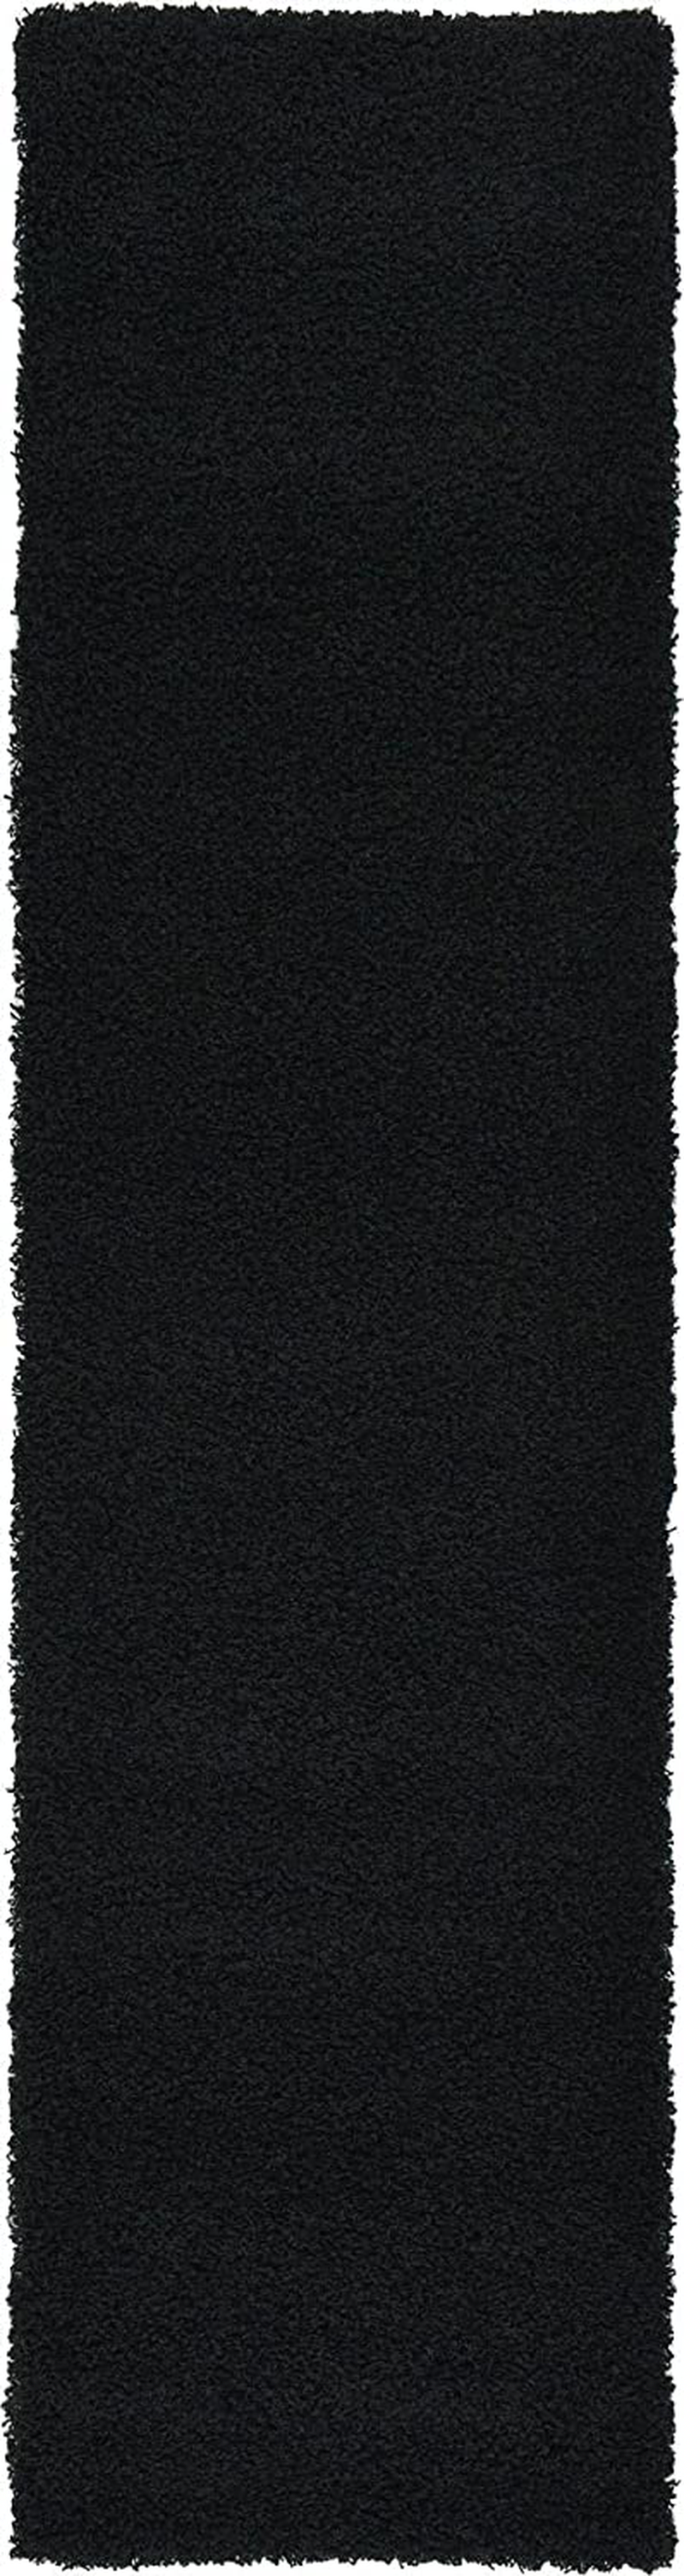 Unique Loom Solo Solid Shag Collection Area Modern Plush Rug Lush & Soft, 2' 6 x 10' 0, Jet Black